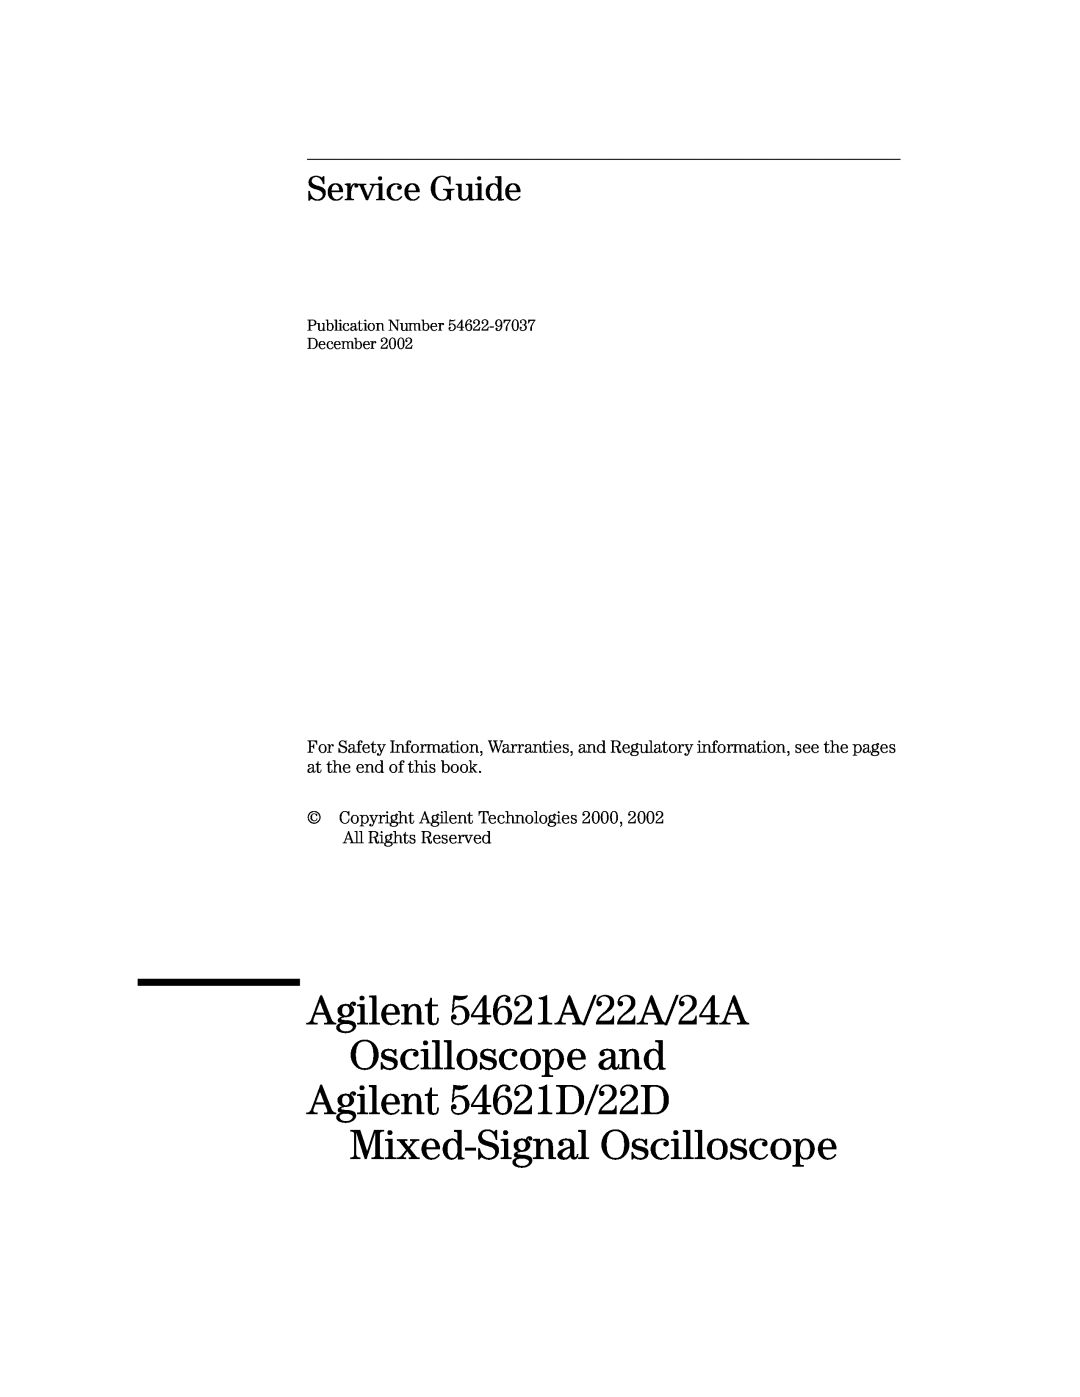 Agilent Technologies manual Service Guide, Agilent 54621D/22D Mixed-Signal Oscilloscope, Publication Number December 